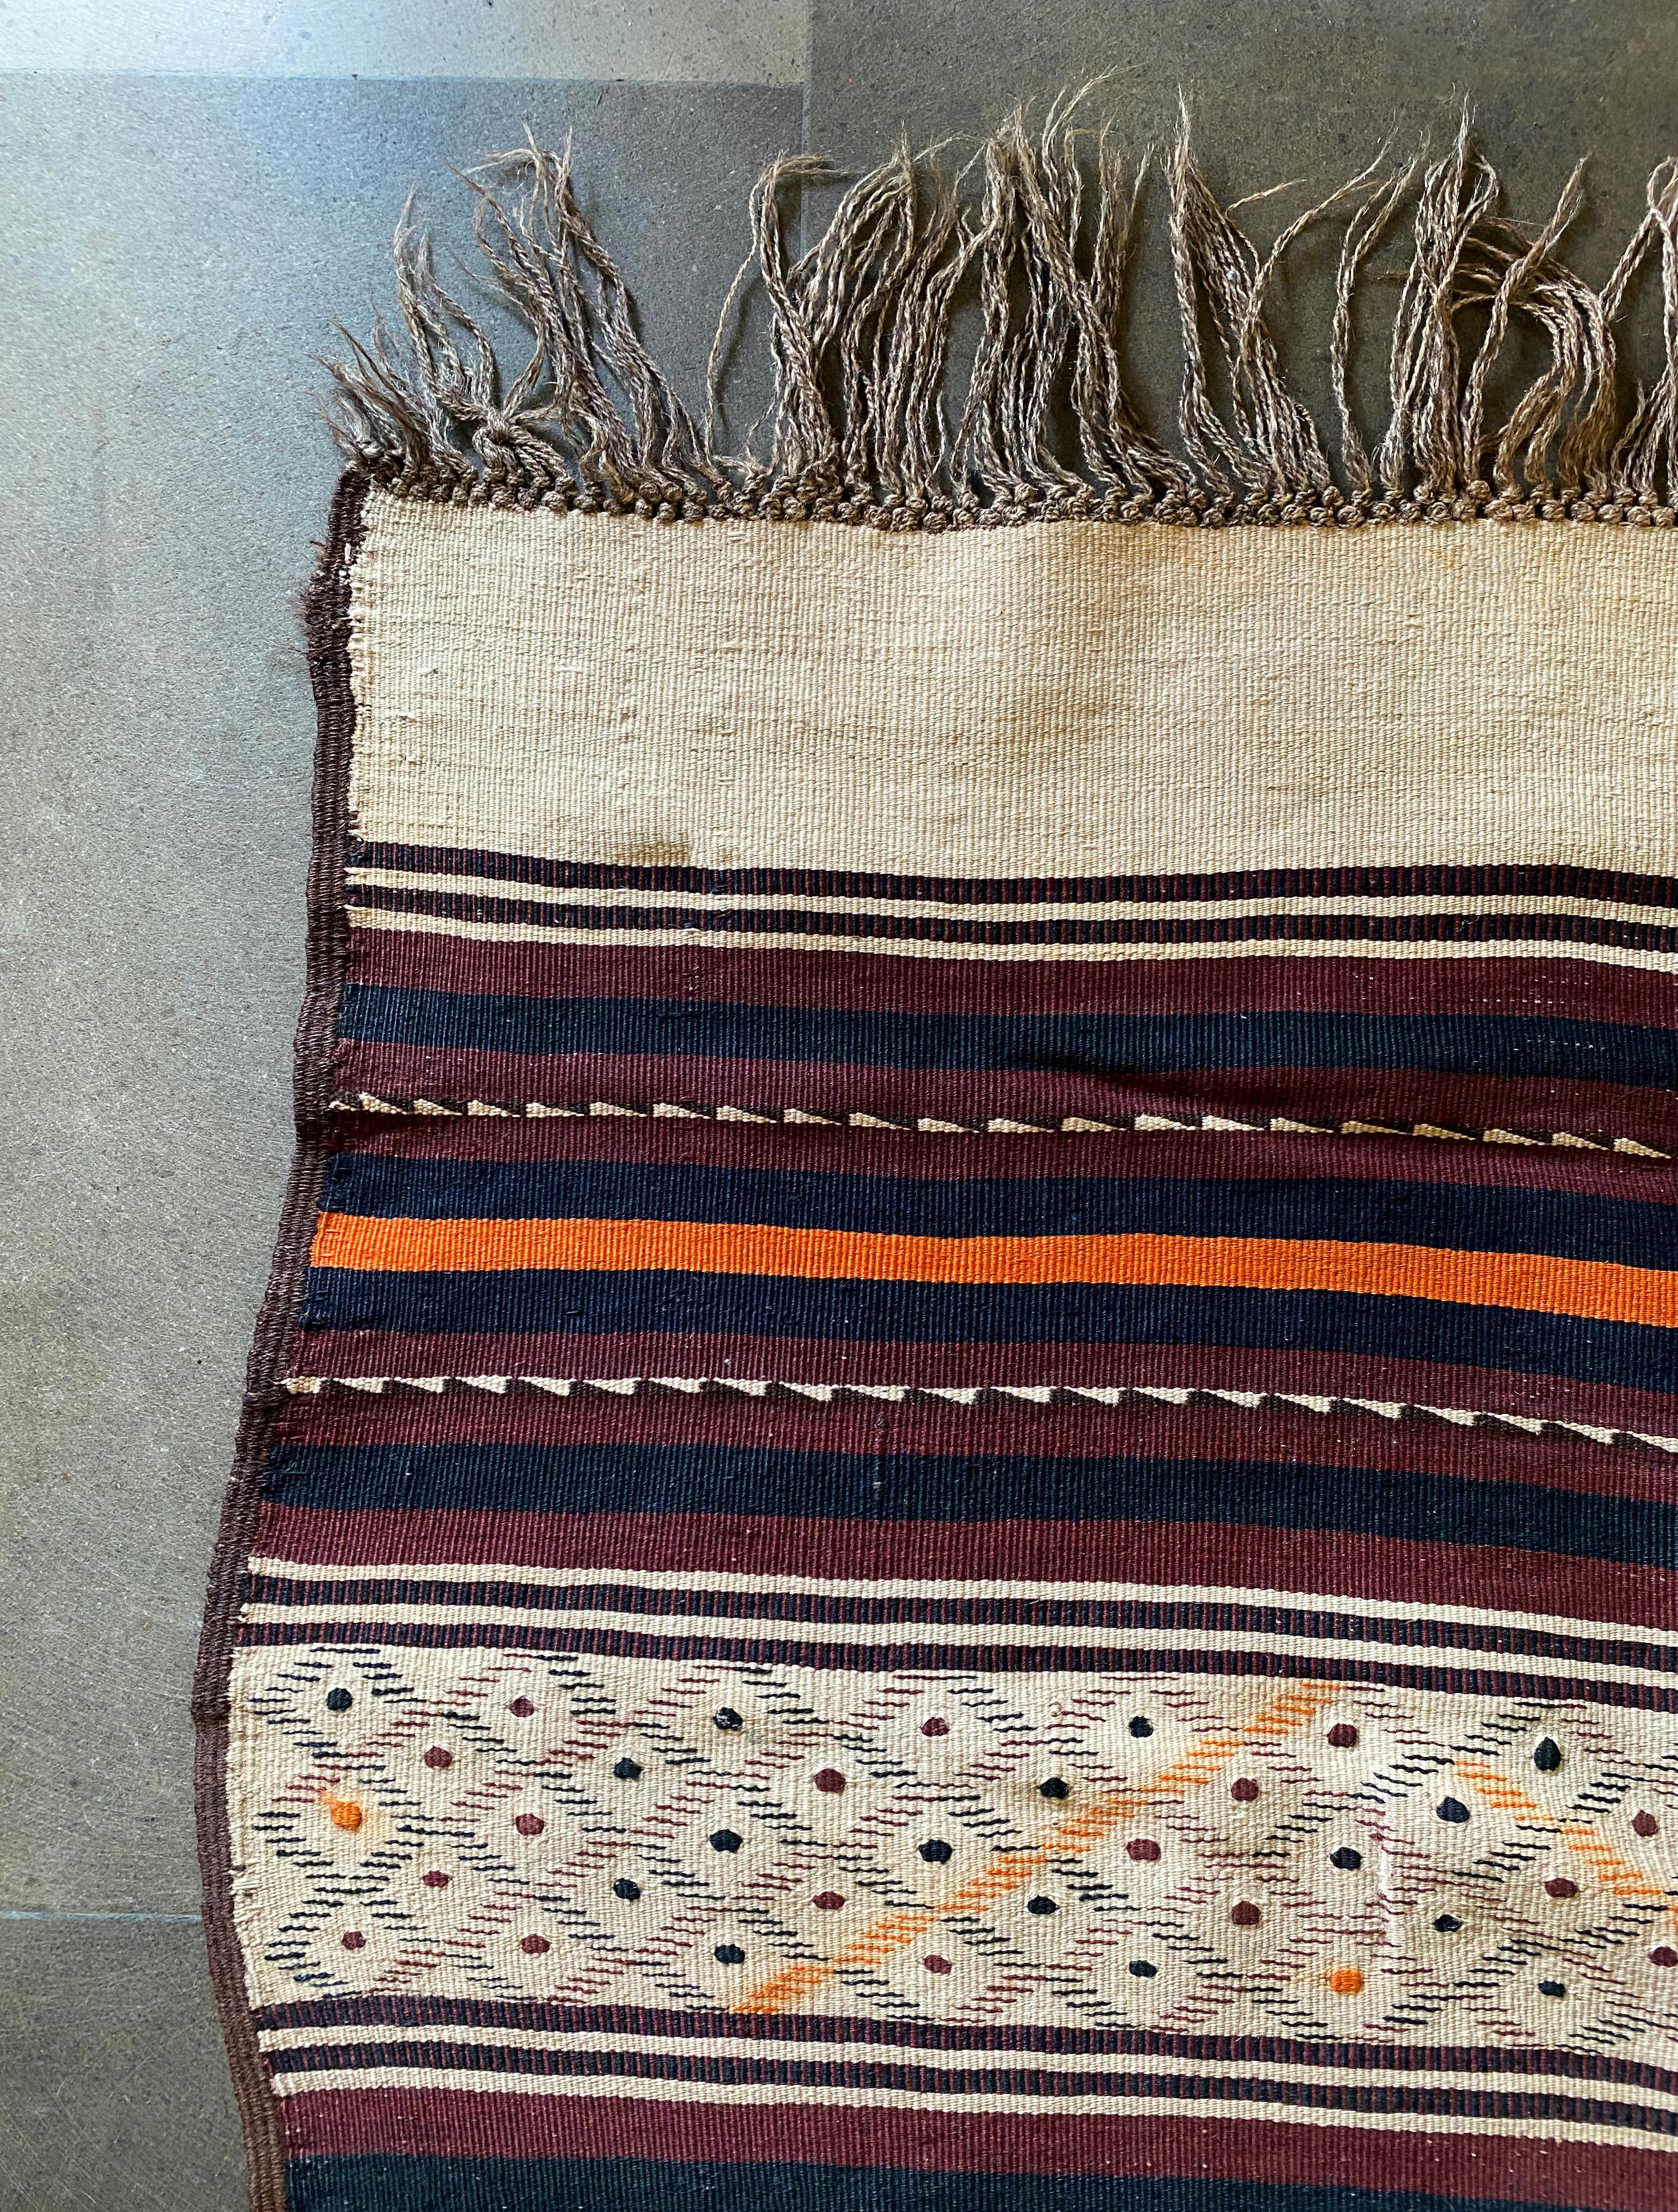 Hand-Crafted Uzbekistan Tartari Safid Kilim Rug from Wool, Early 20th Century For Sale